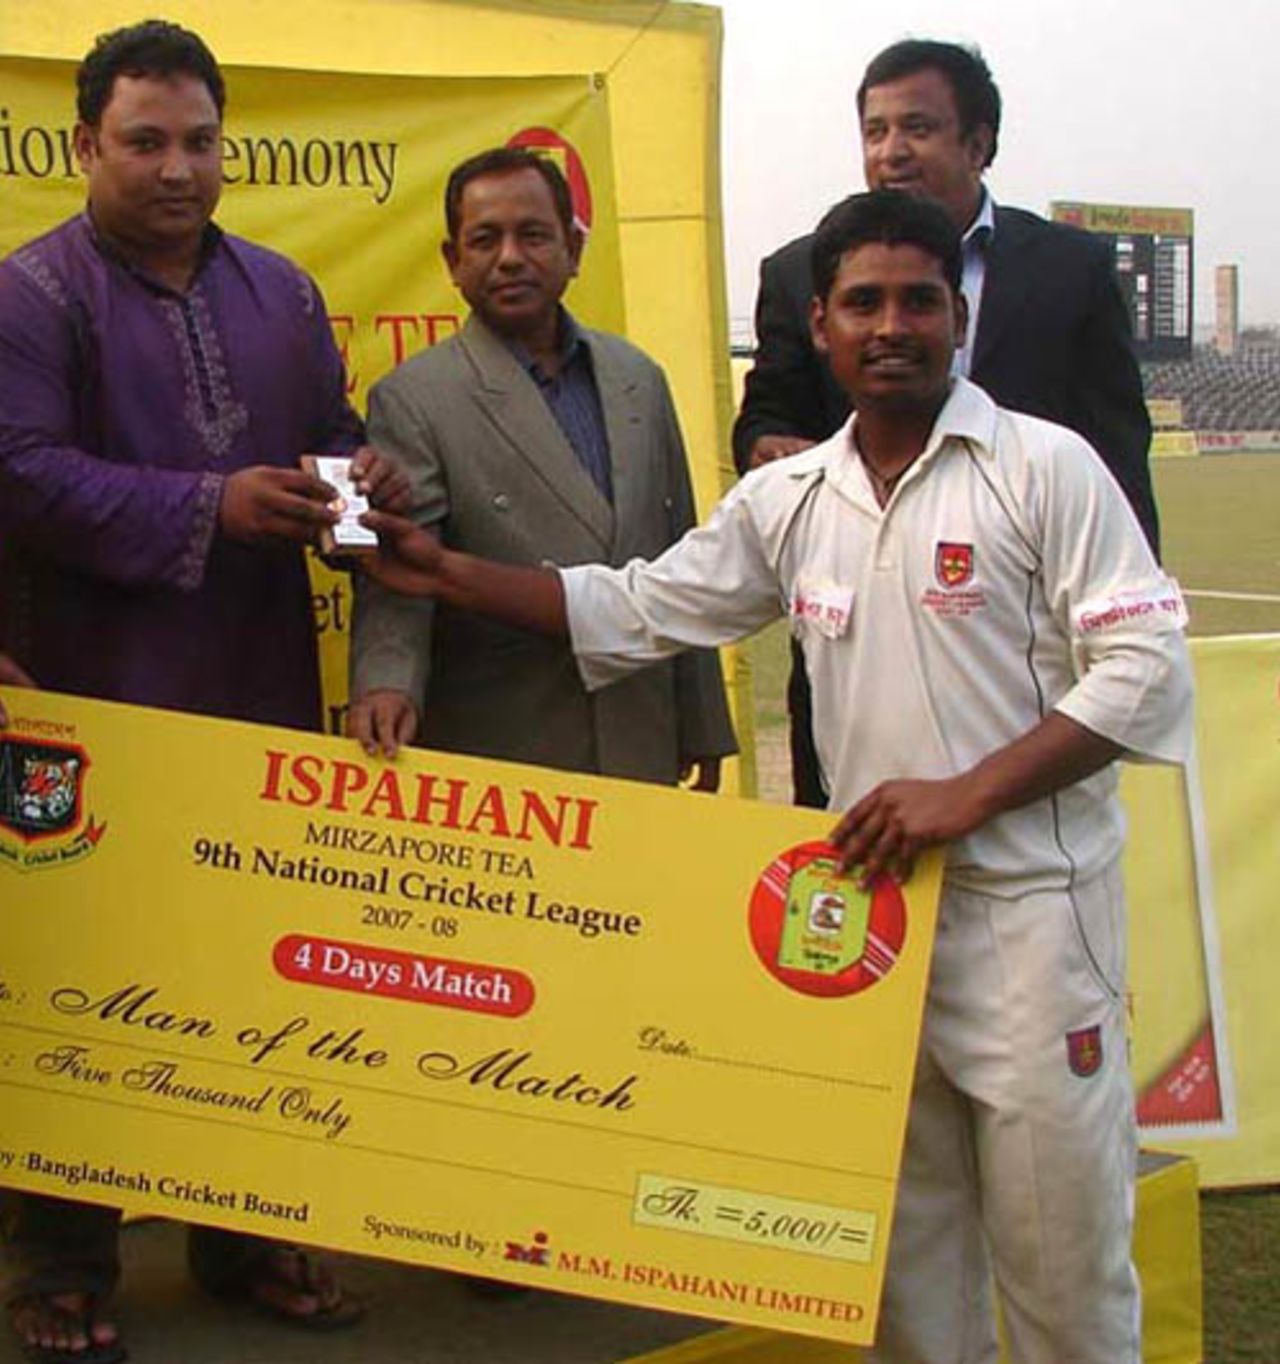 Sylhet's Golam Mabud receives the Man-of-the-Match award
, Sylhet Division v Dhaka Division, Fatullah, December 8, 2007